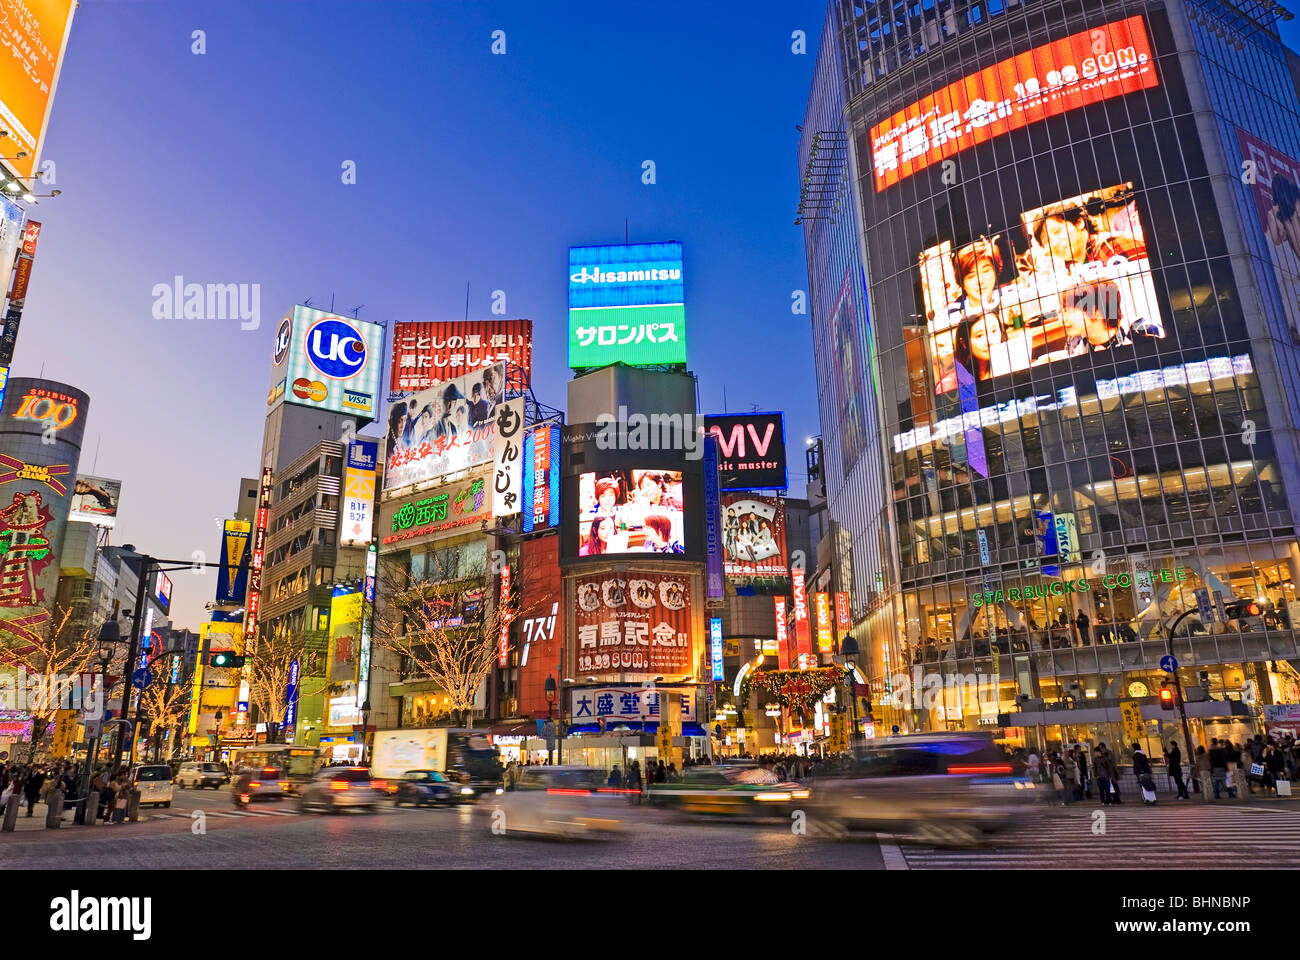 Tokyo Shibuya Crossing, Hachiko Square, Japan, Neon Advertising Billboards Stock Photo